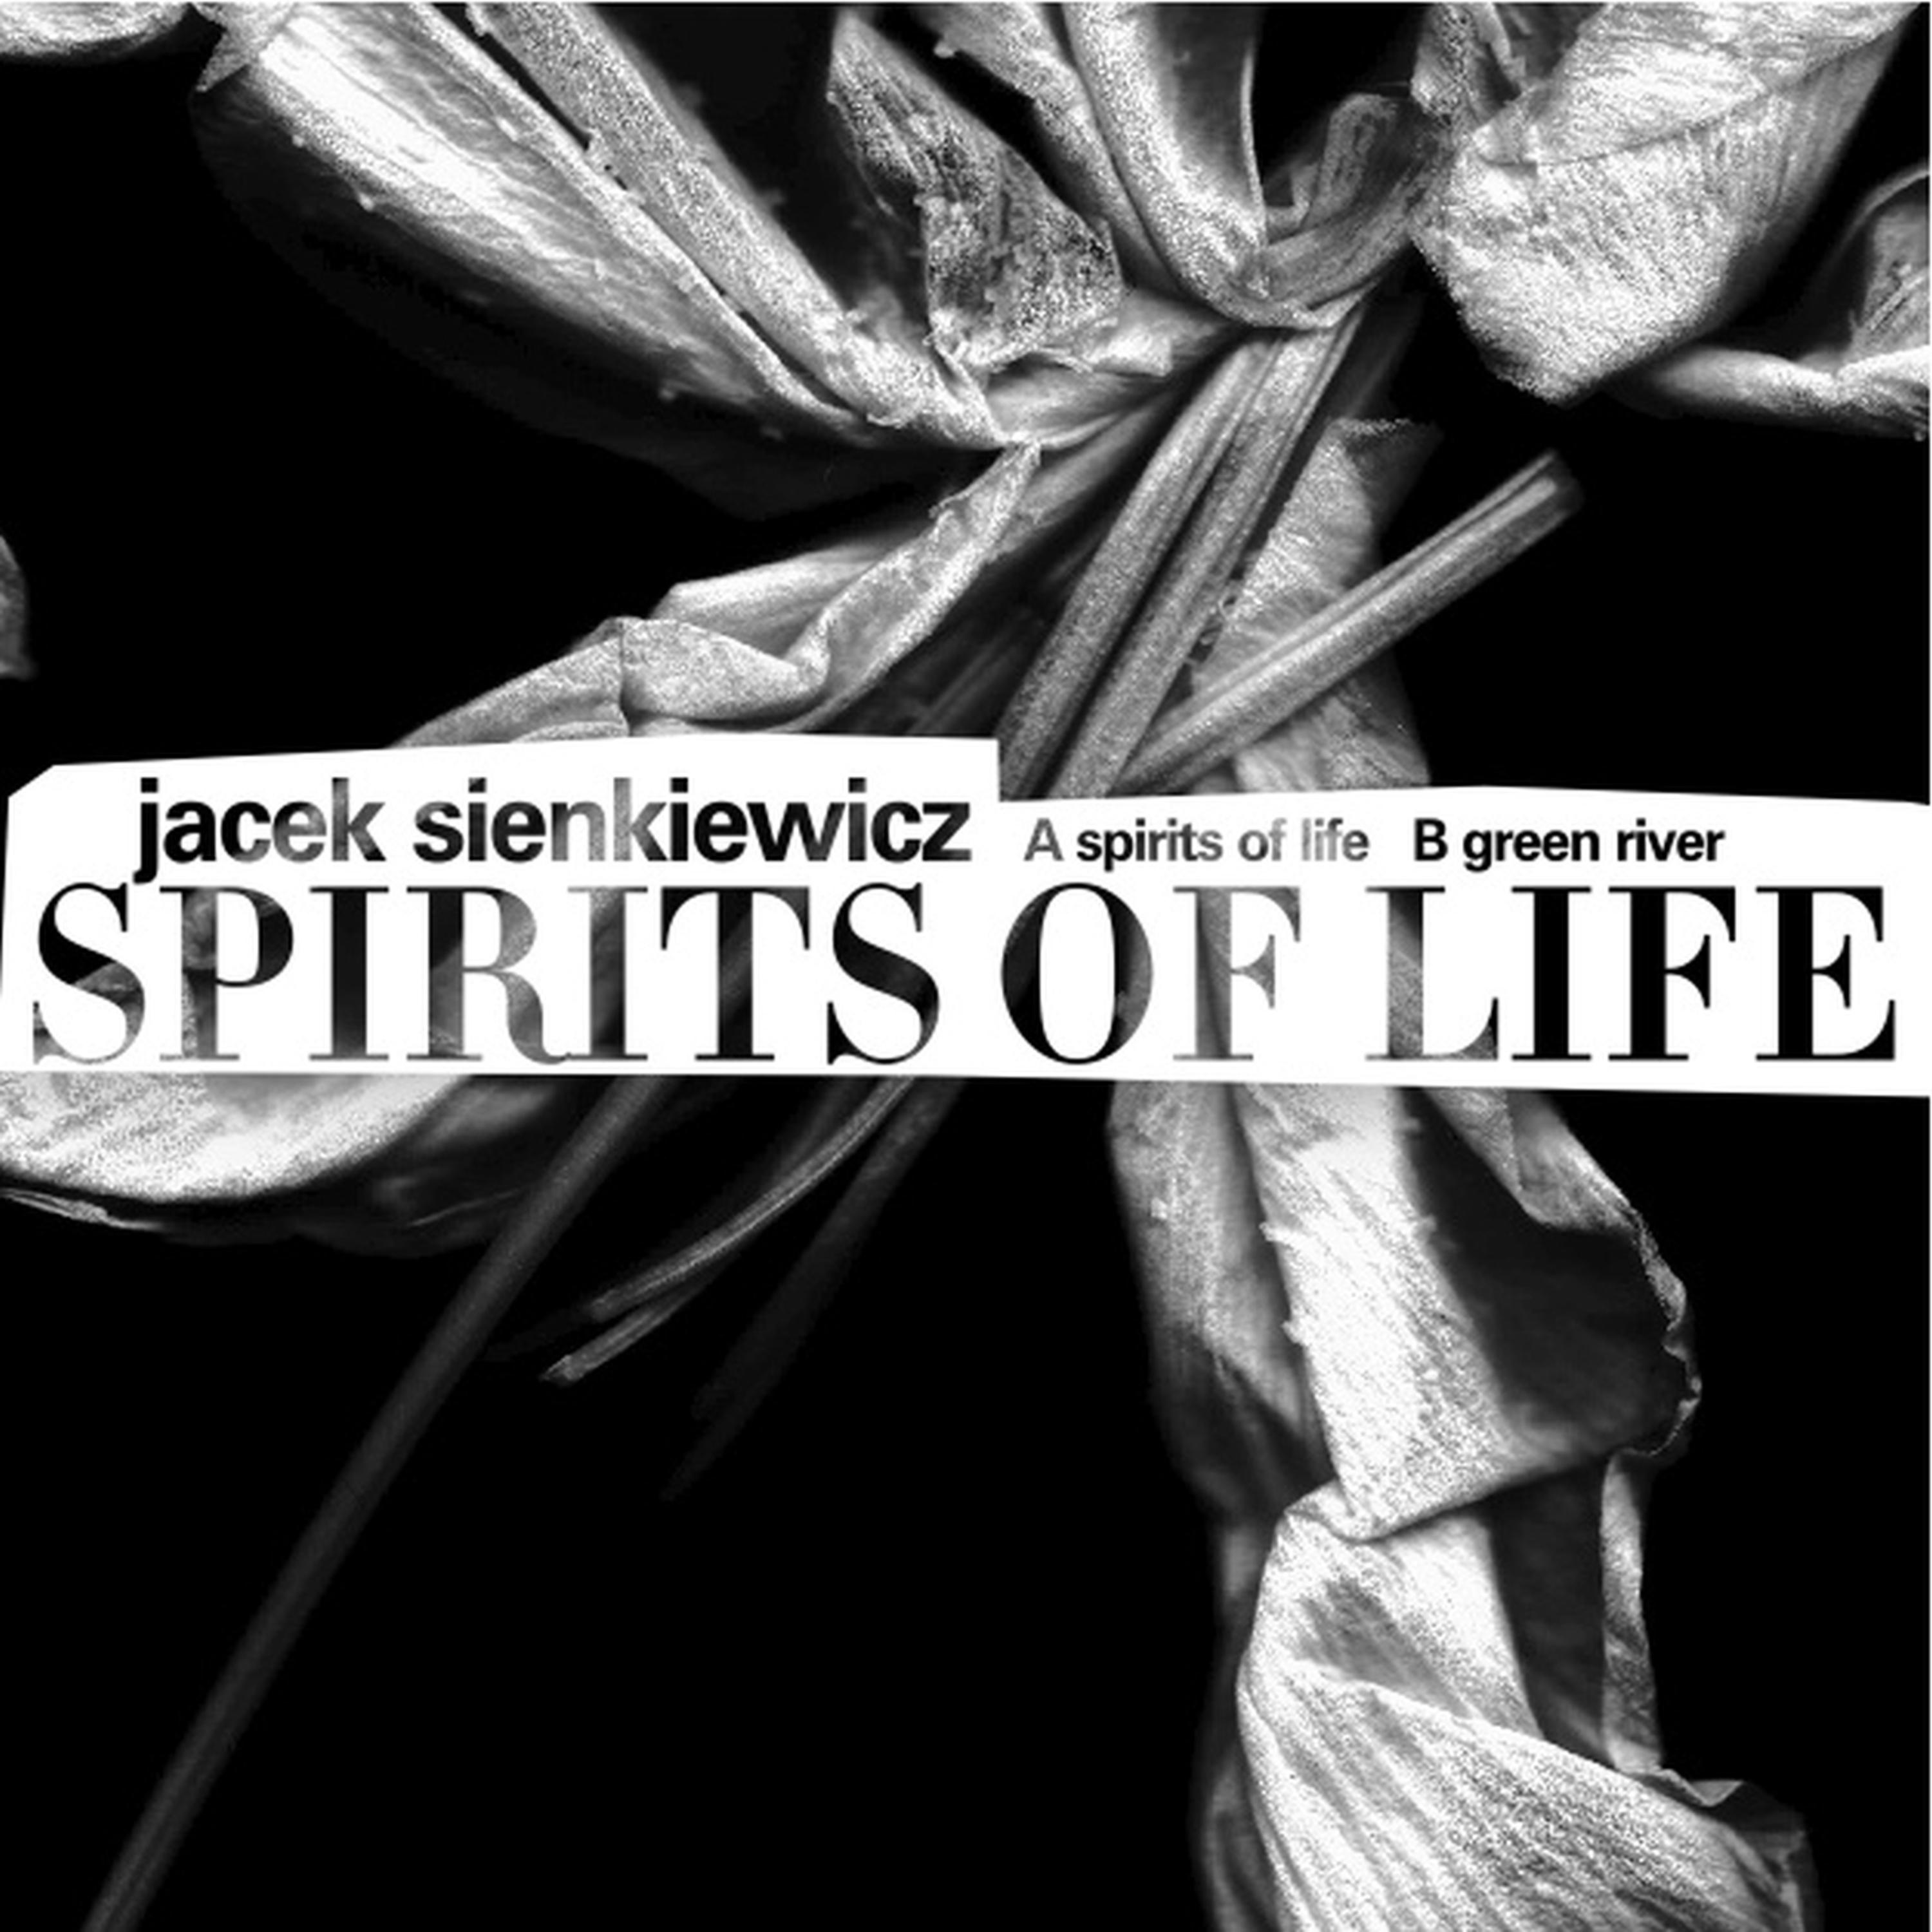 Spirits Of Life